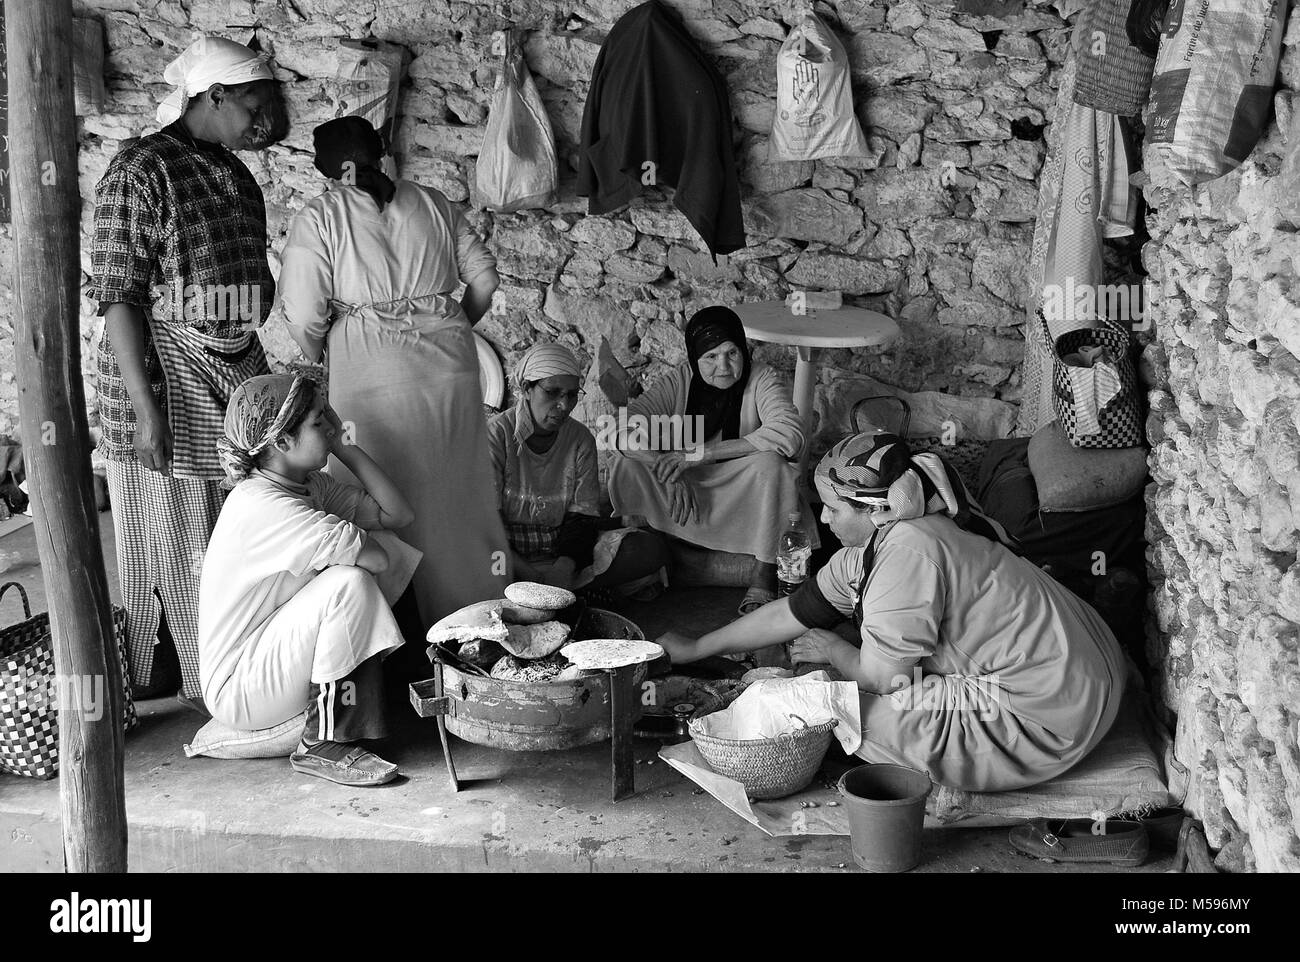 Berber lunch - Morocco Stock Photo